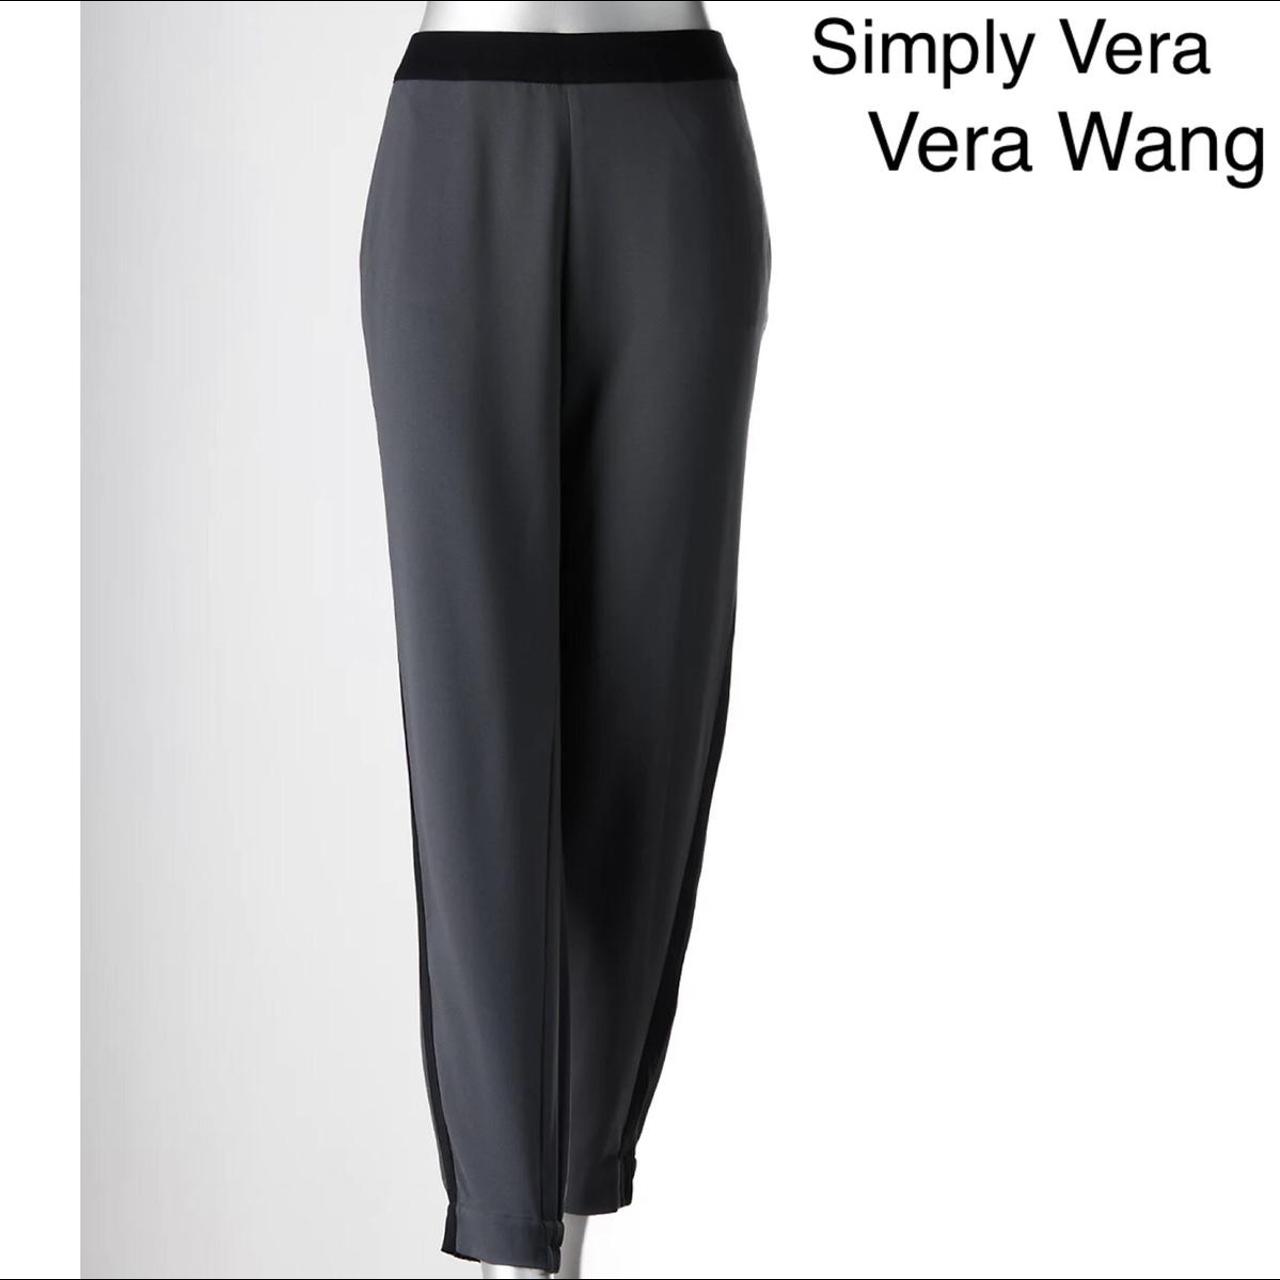 Simply Vera Vera Wang Pants Womens Medium White Black Striped